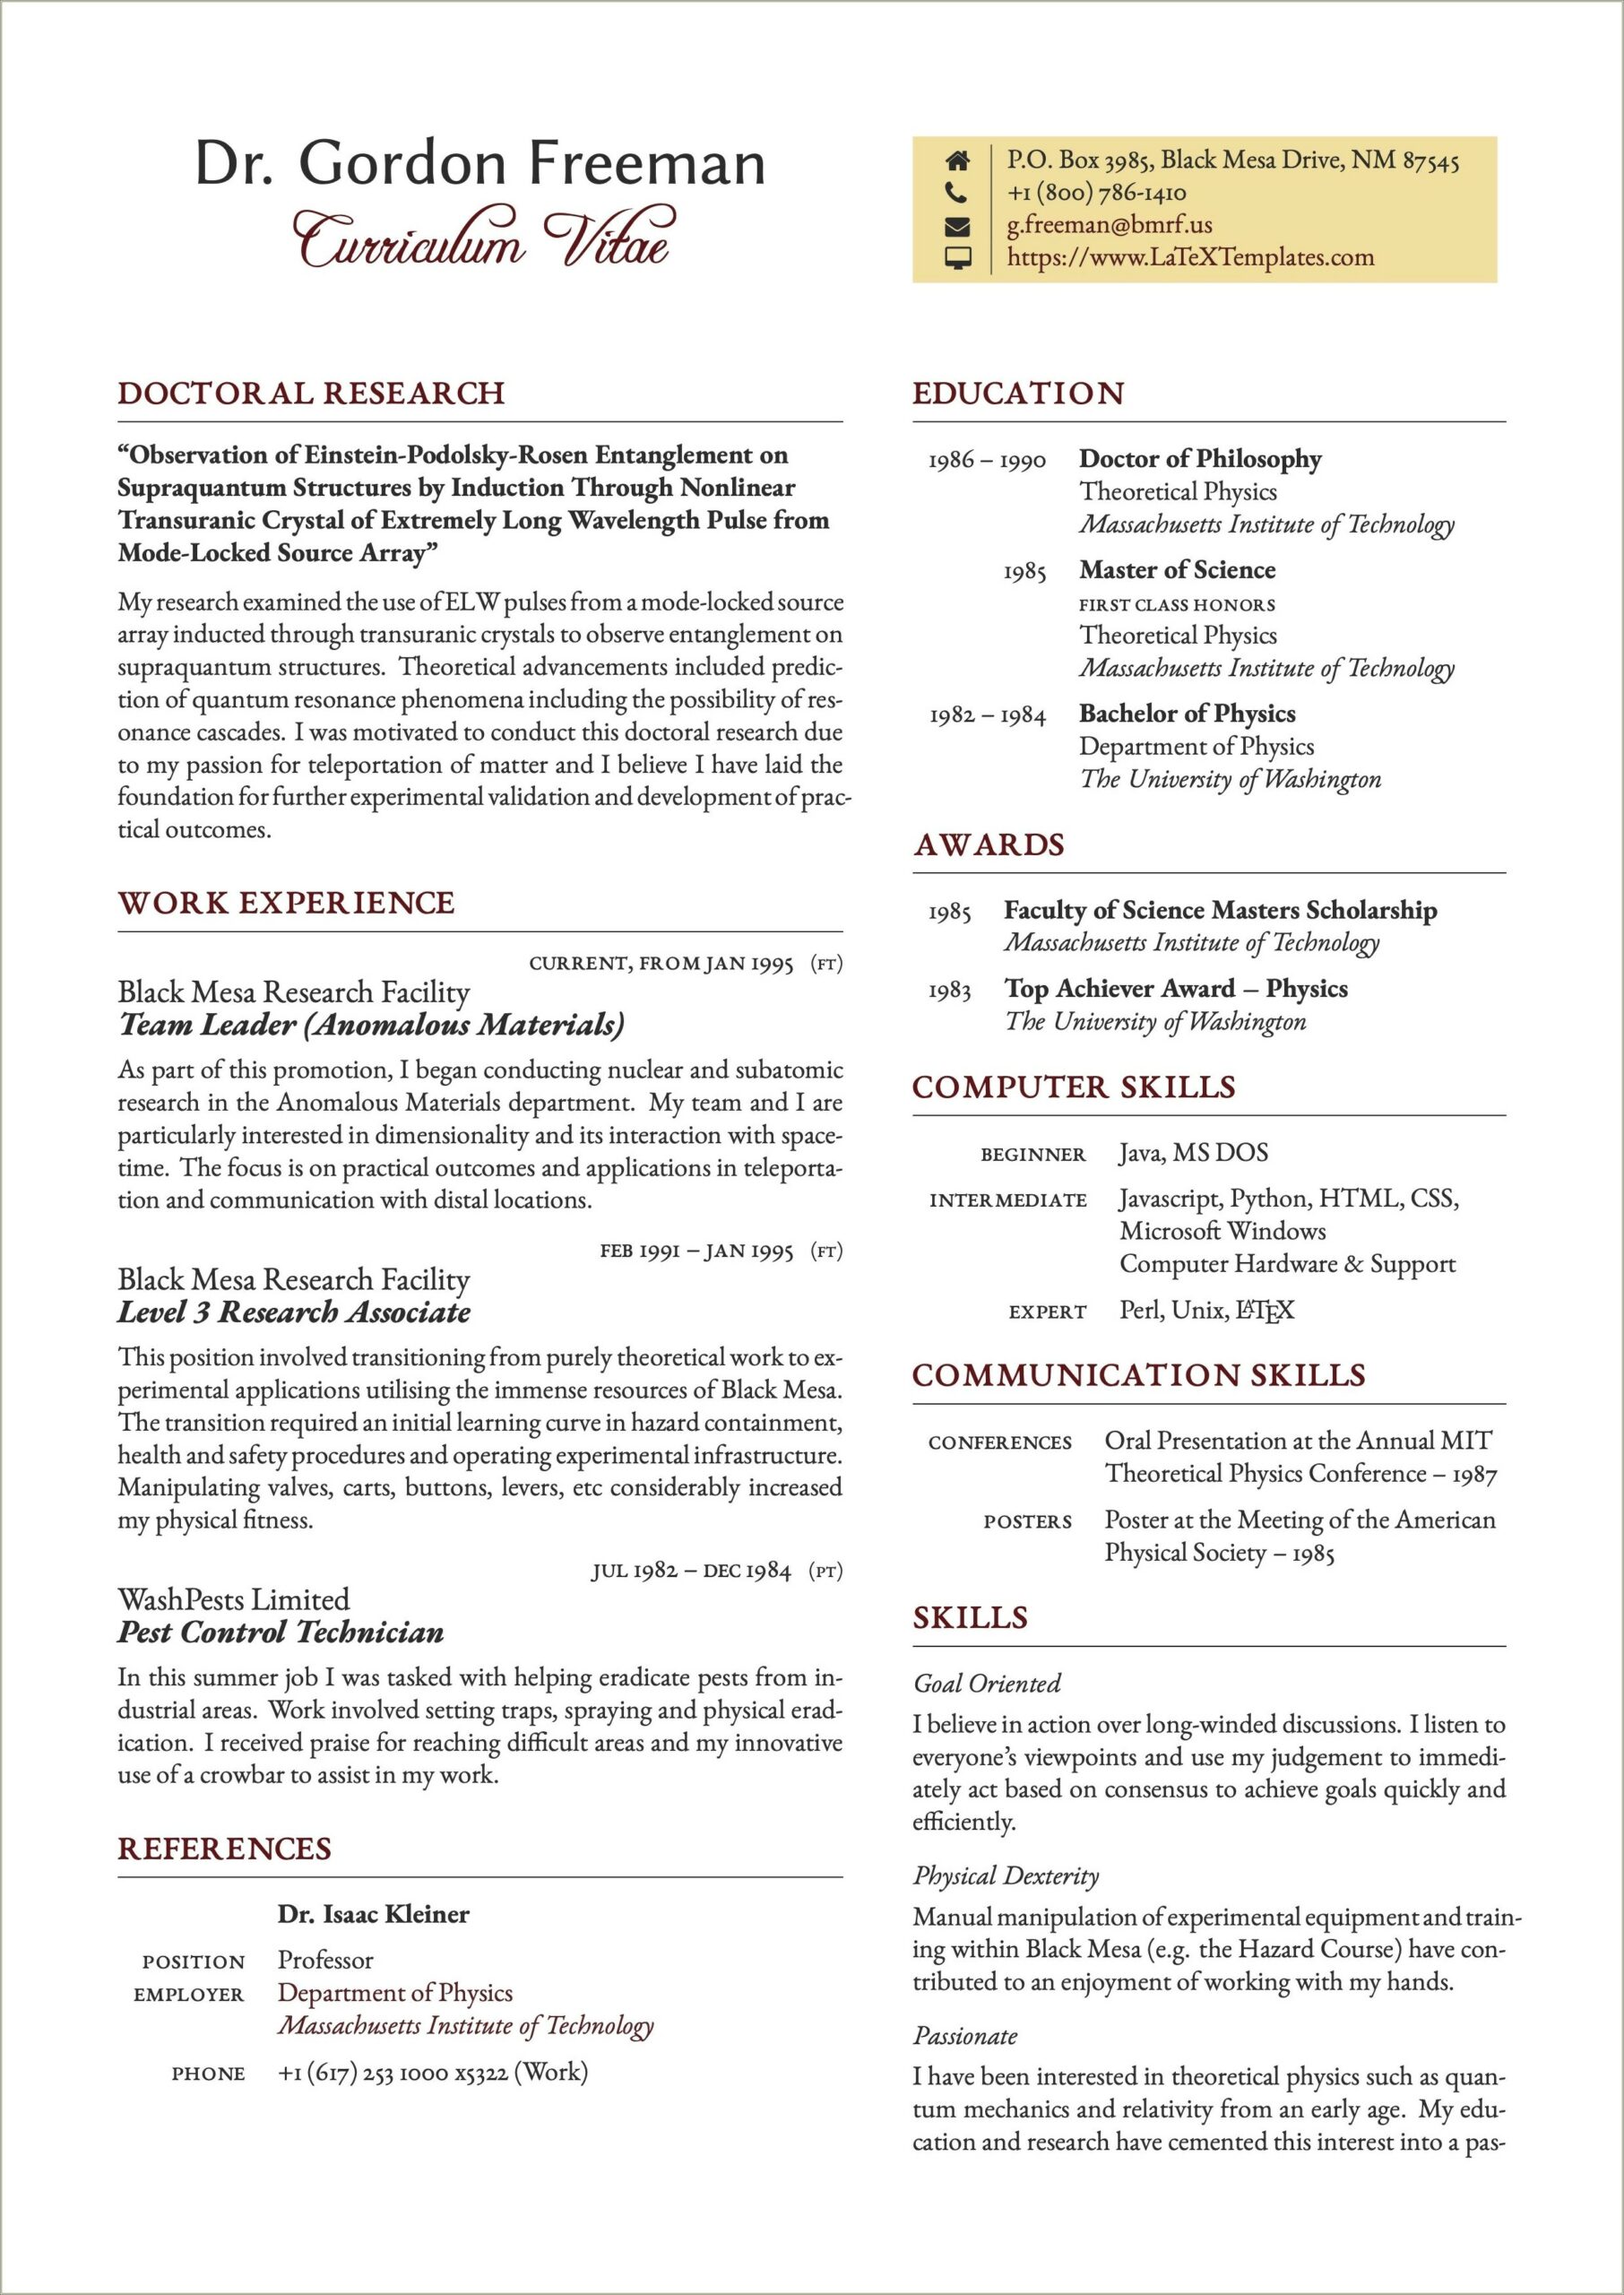 Sample Speech Patholgoy Grad School Resume